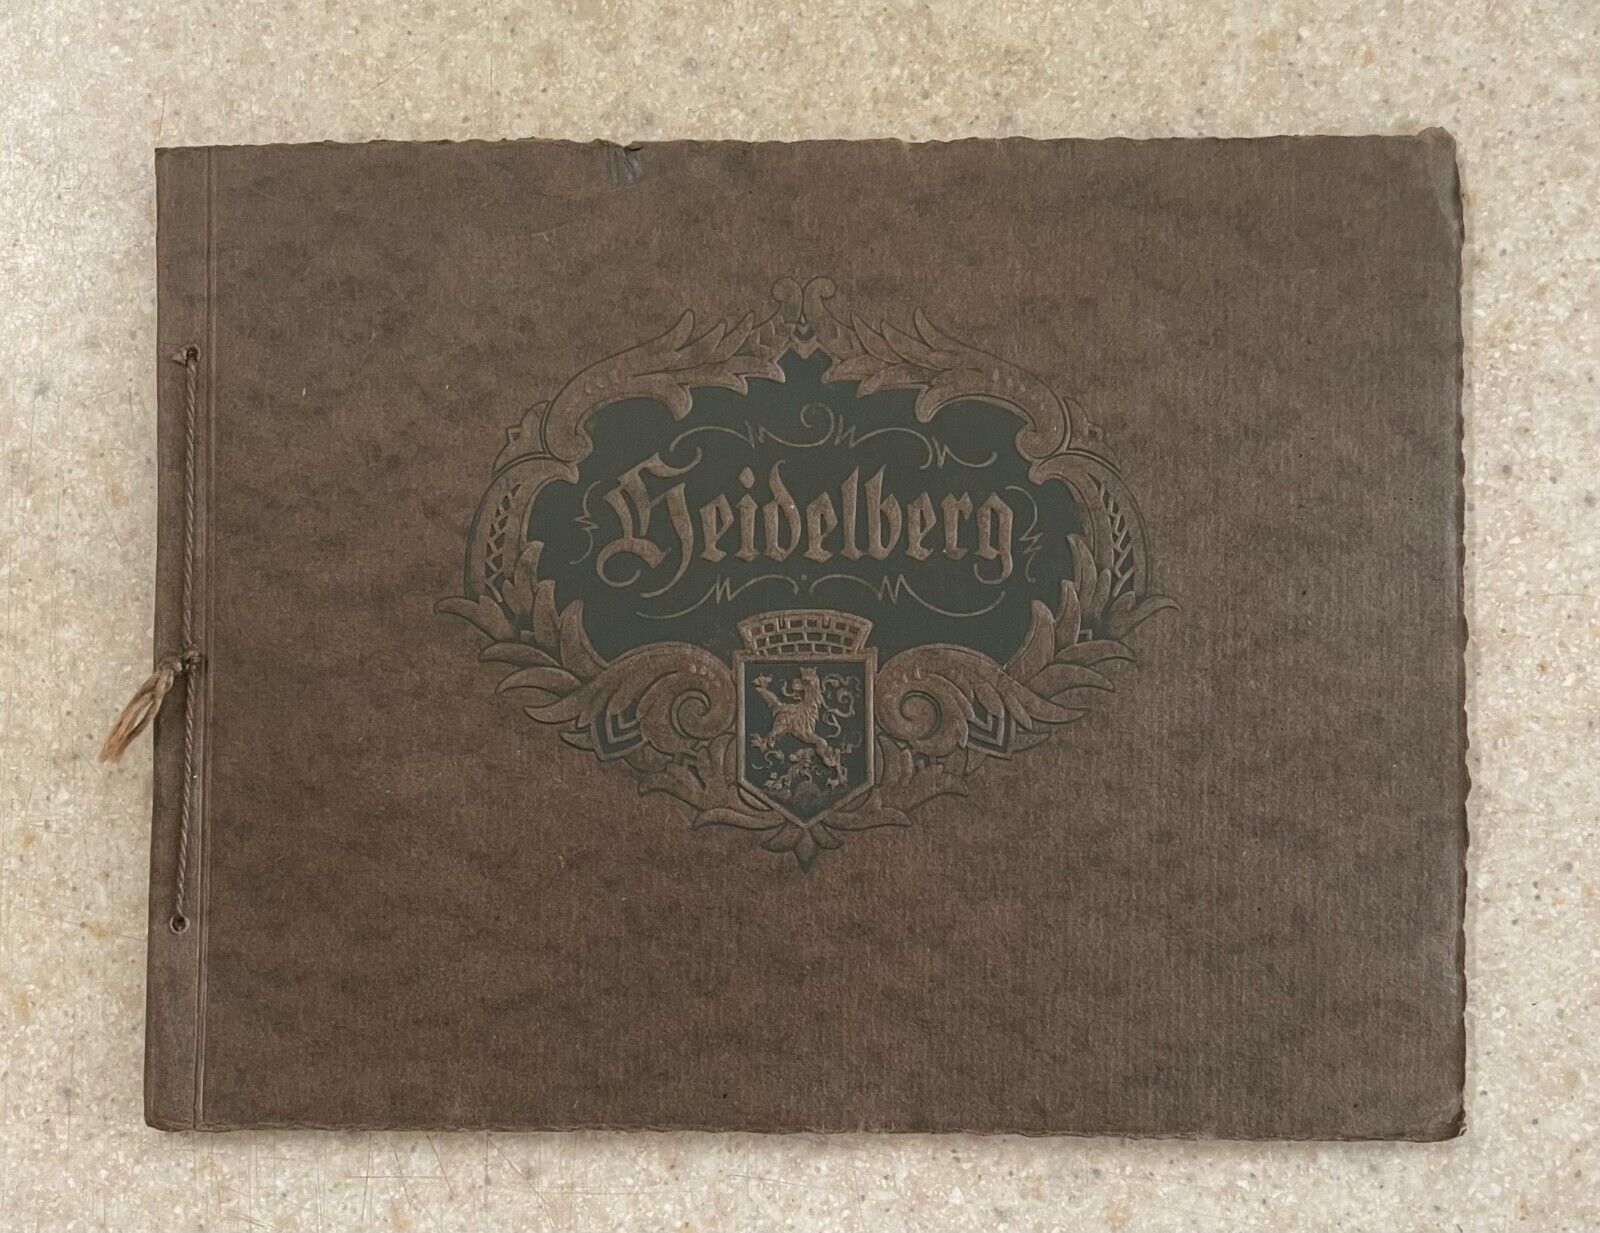 HEIDELBERG, GERMANY 1930s ALBUM - PHOTOS - POST CARDS & SCHLOSS HOTEL BROCHURE